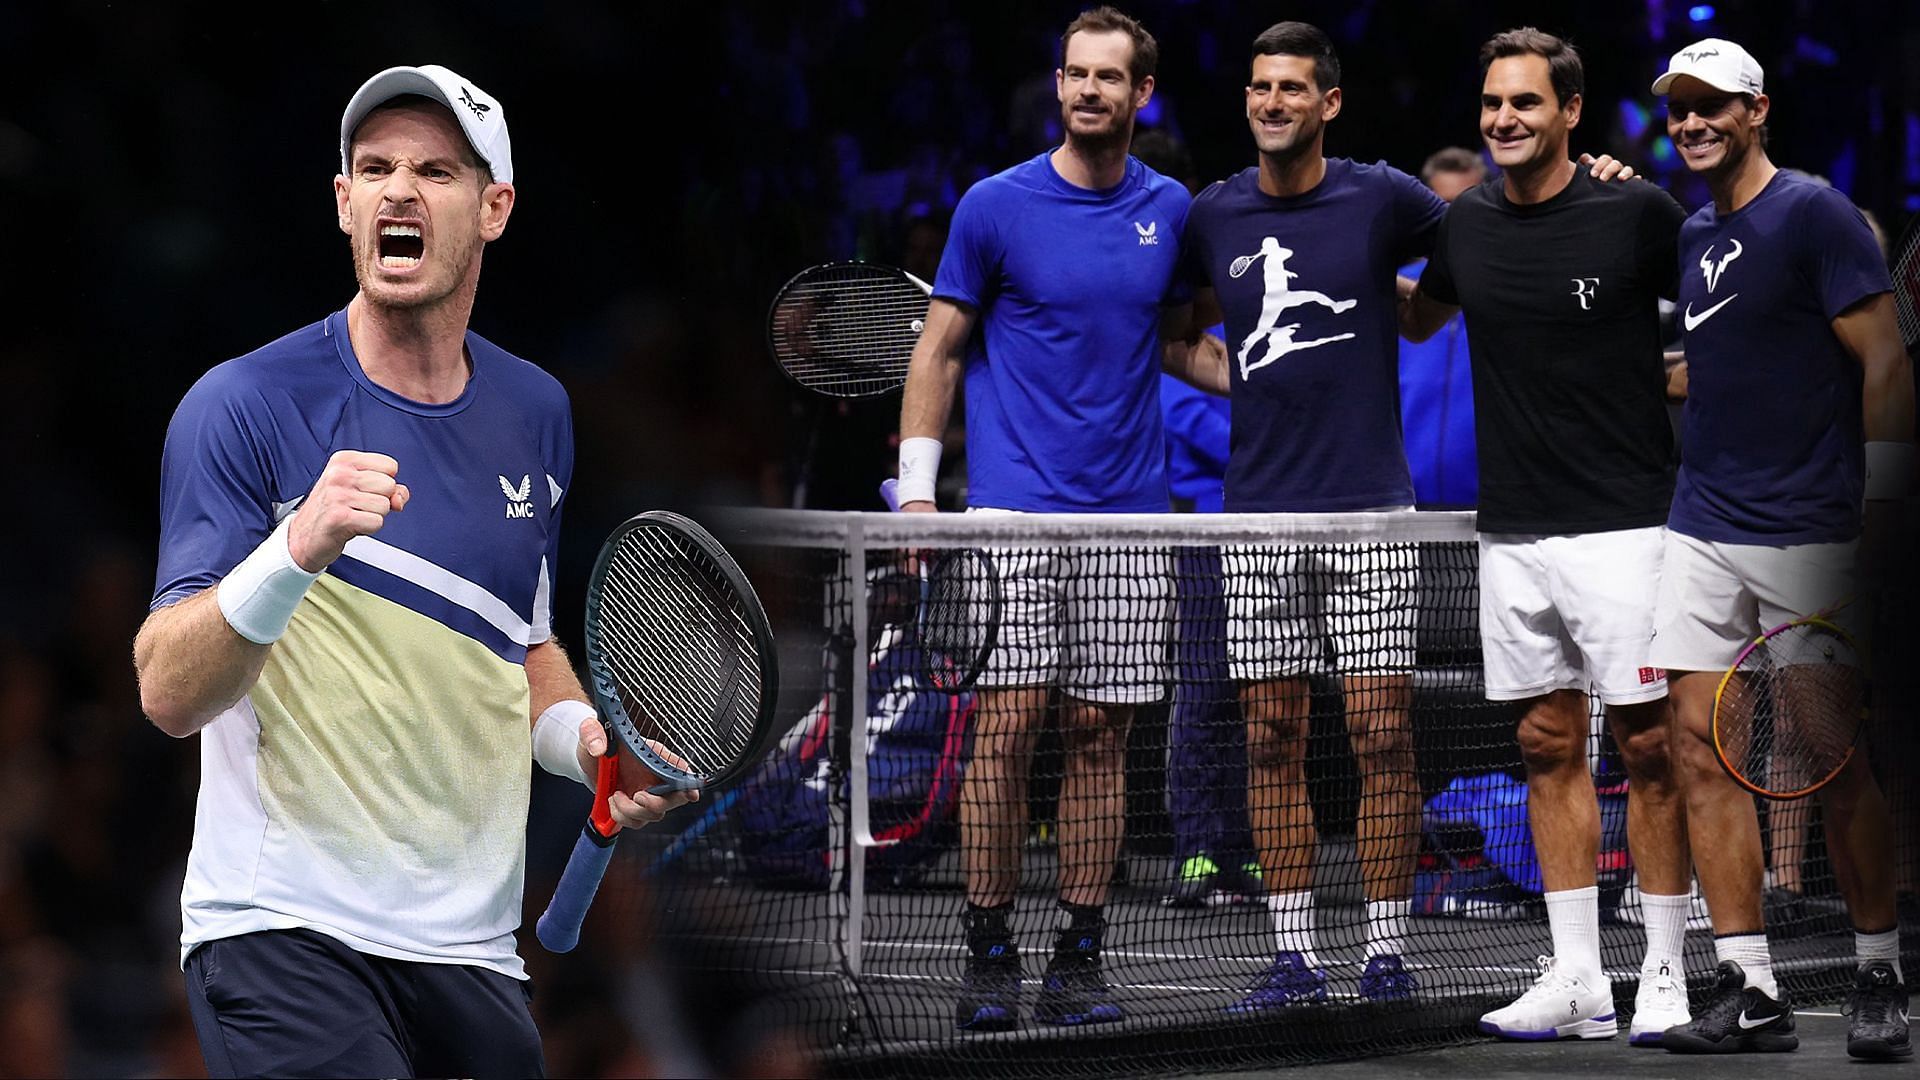 Andy Murray pictured alongside Roger Federer, Rafael Nadal and Novak Djokovic